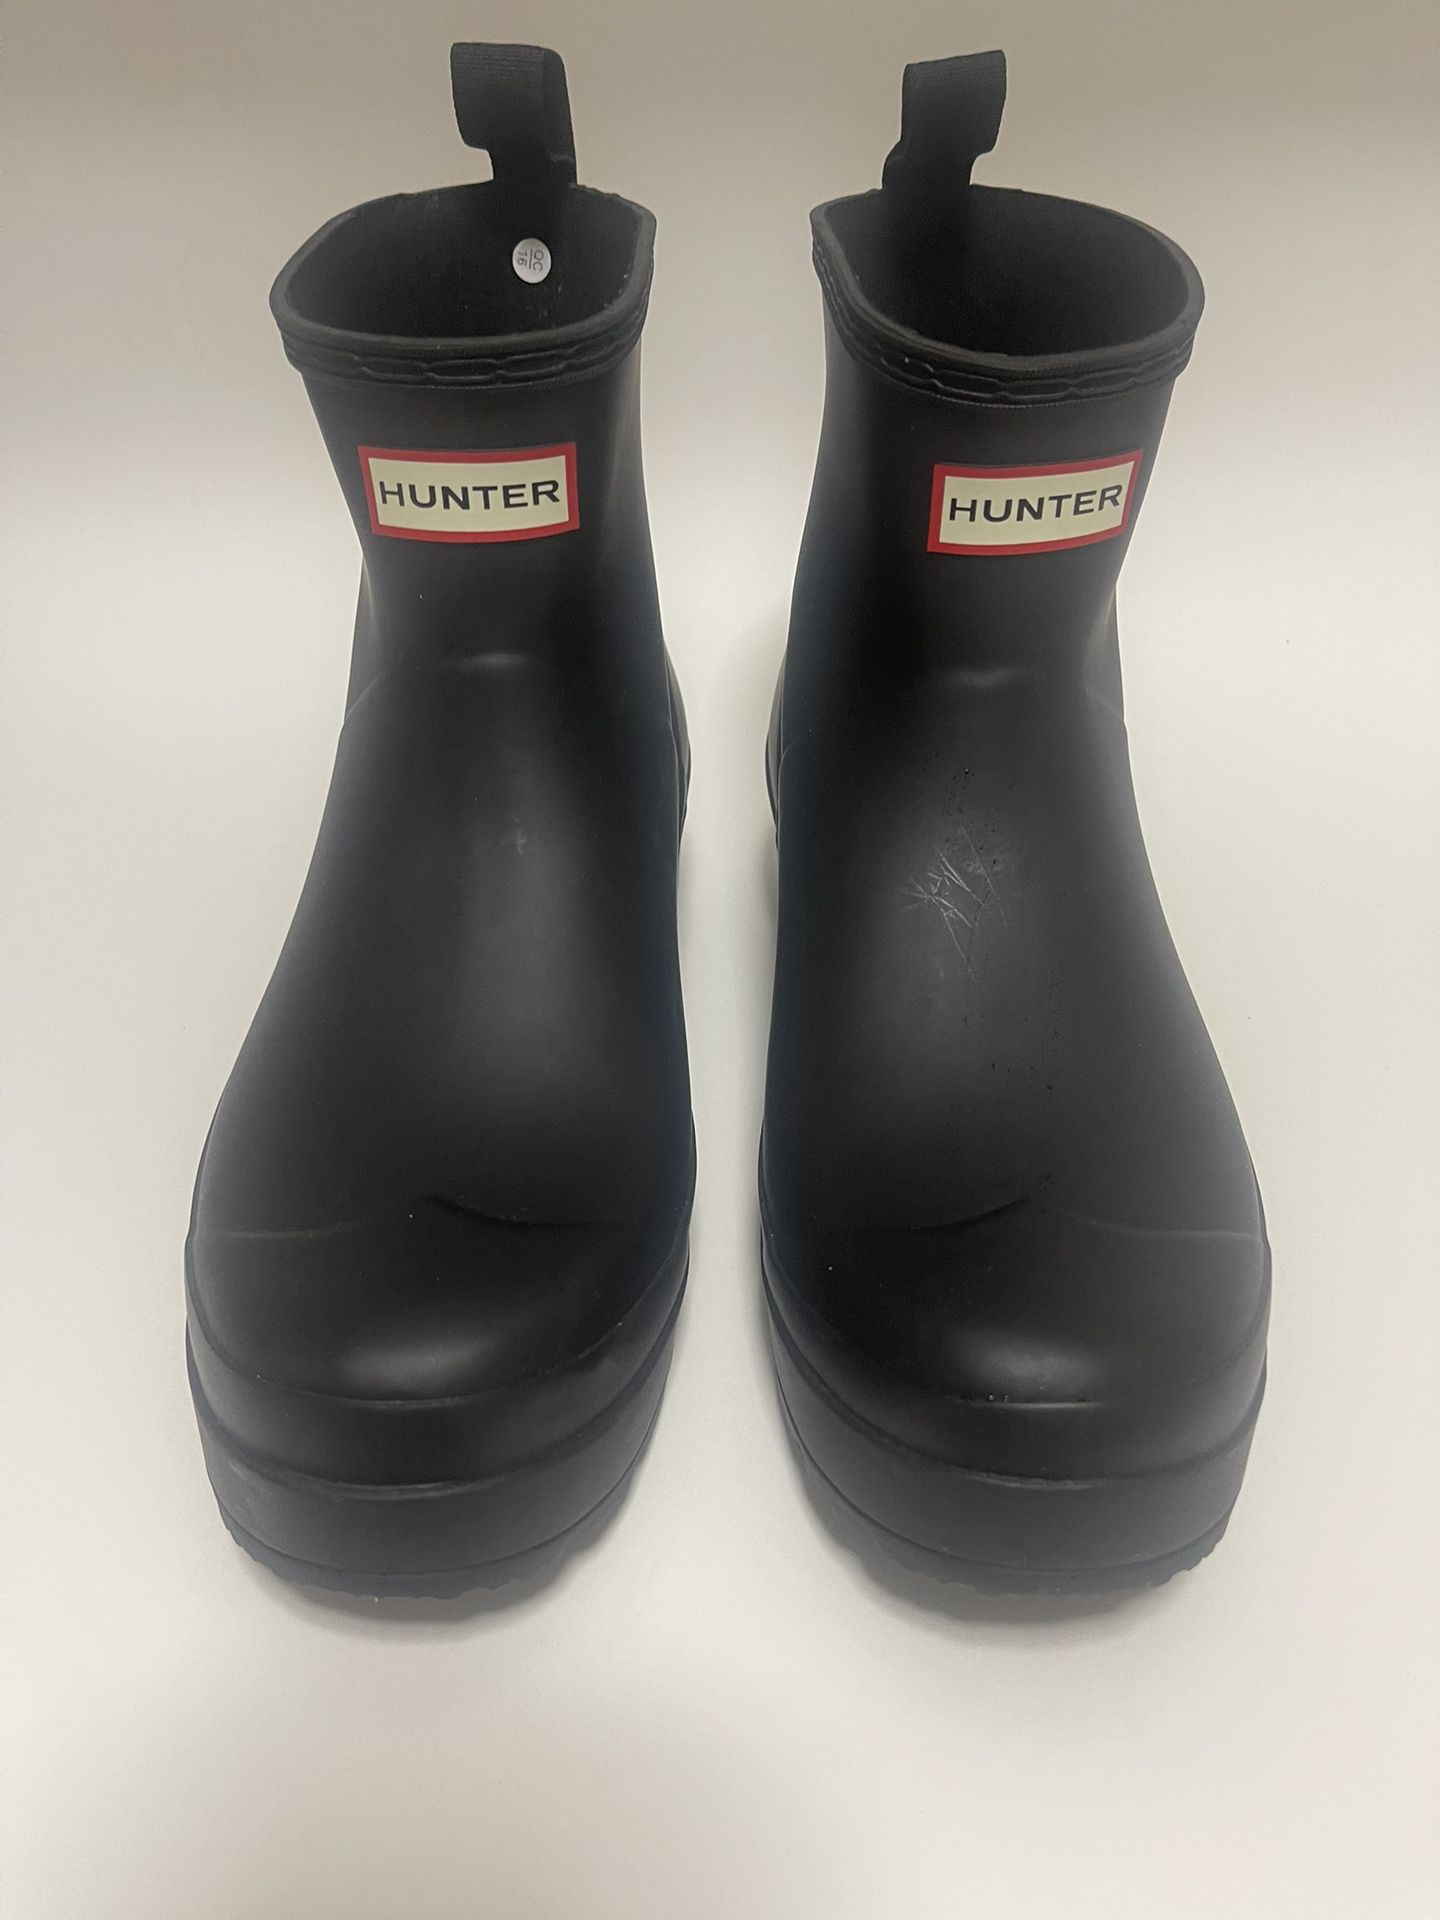 HUNTER Play Rain boots women’s size 11, Black